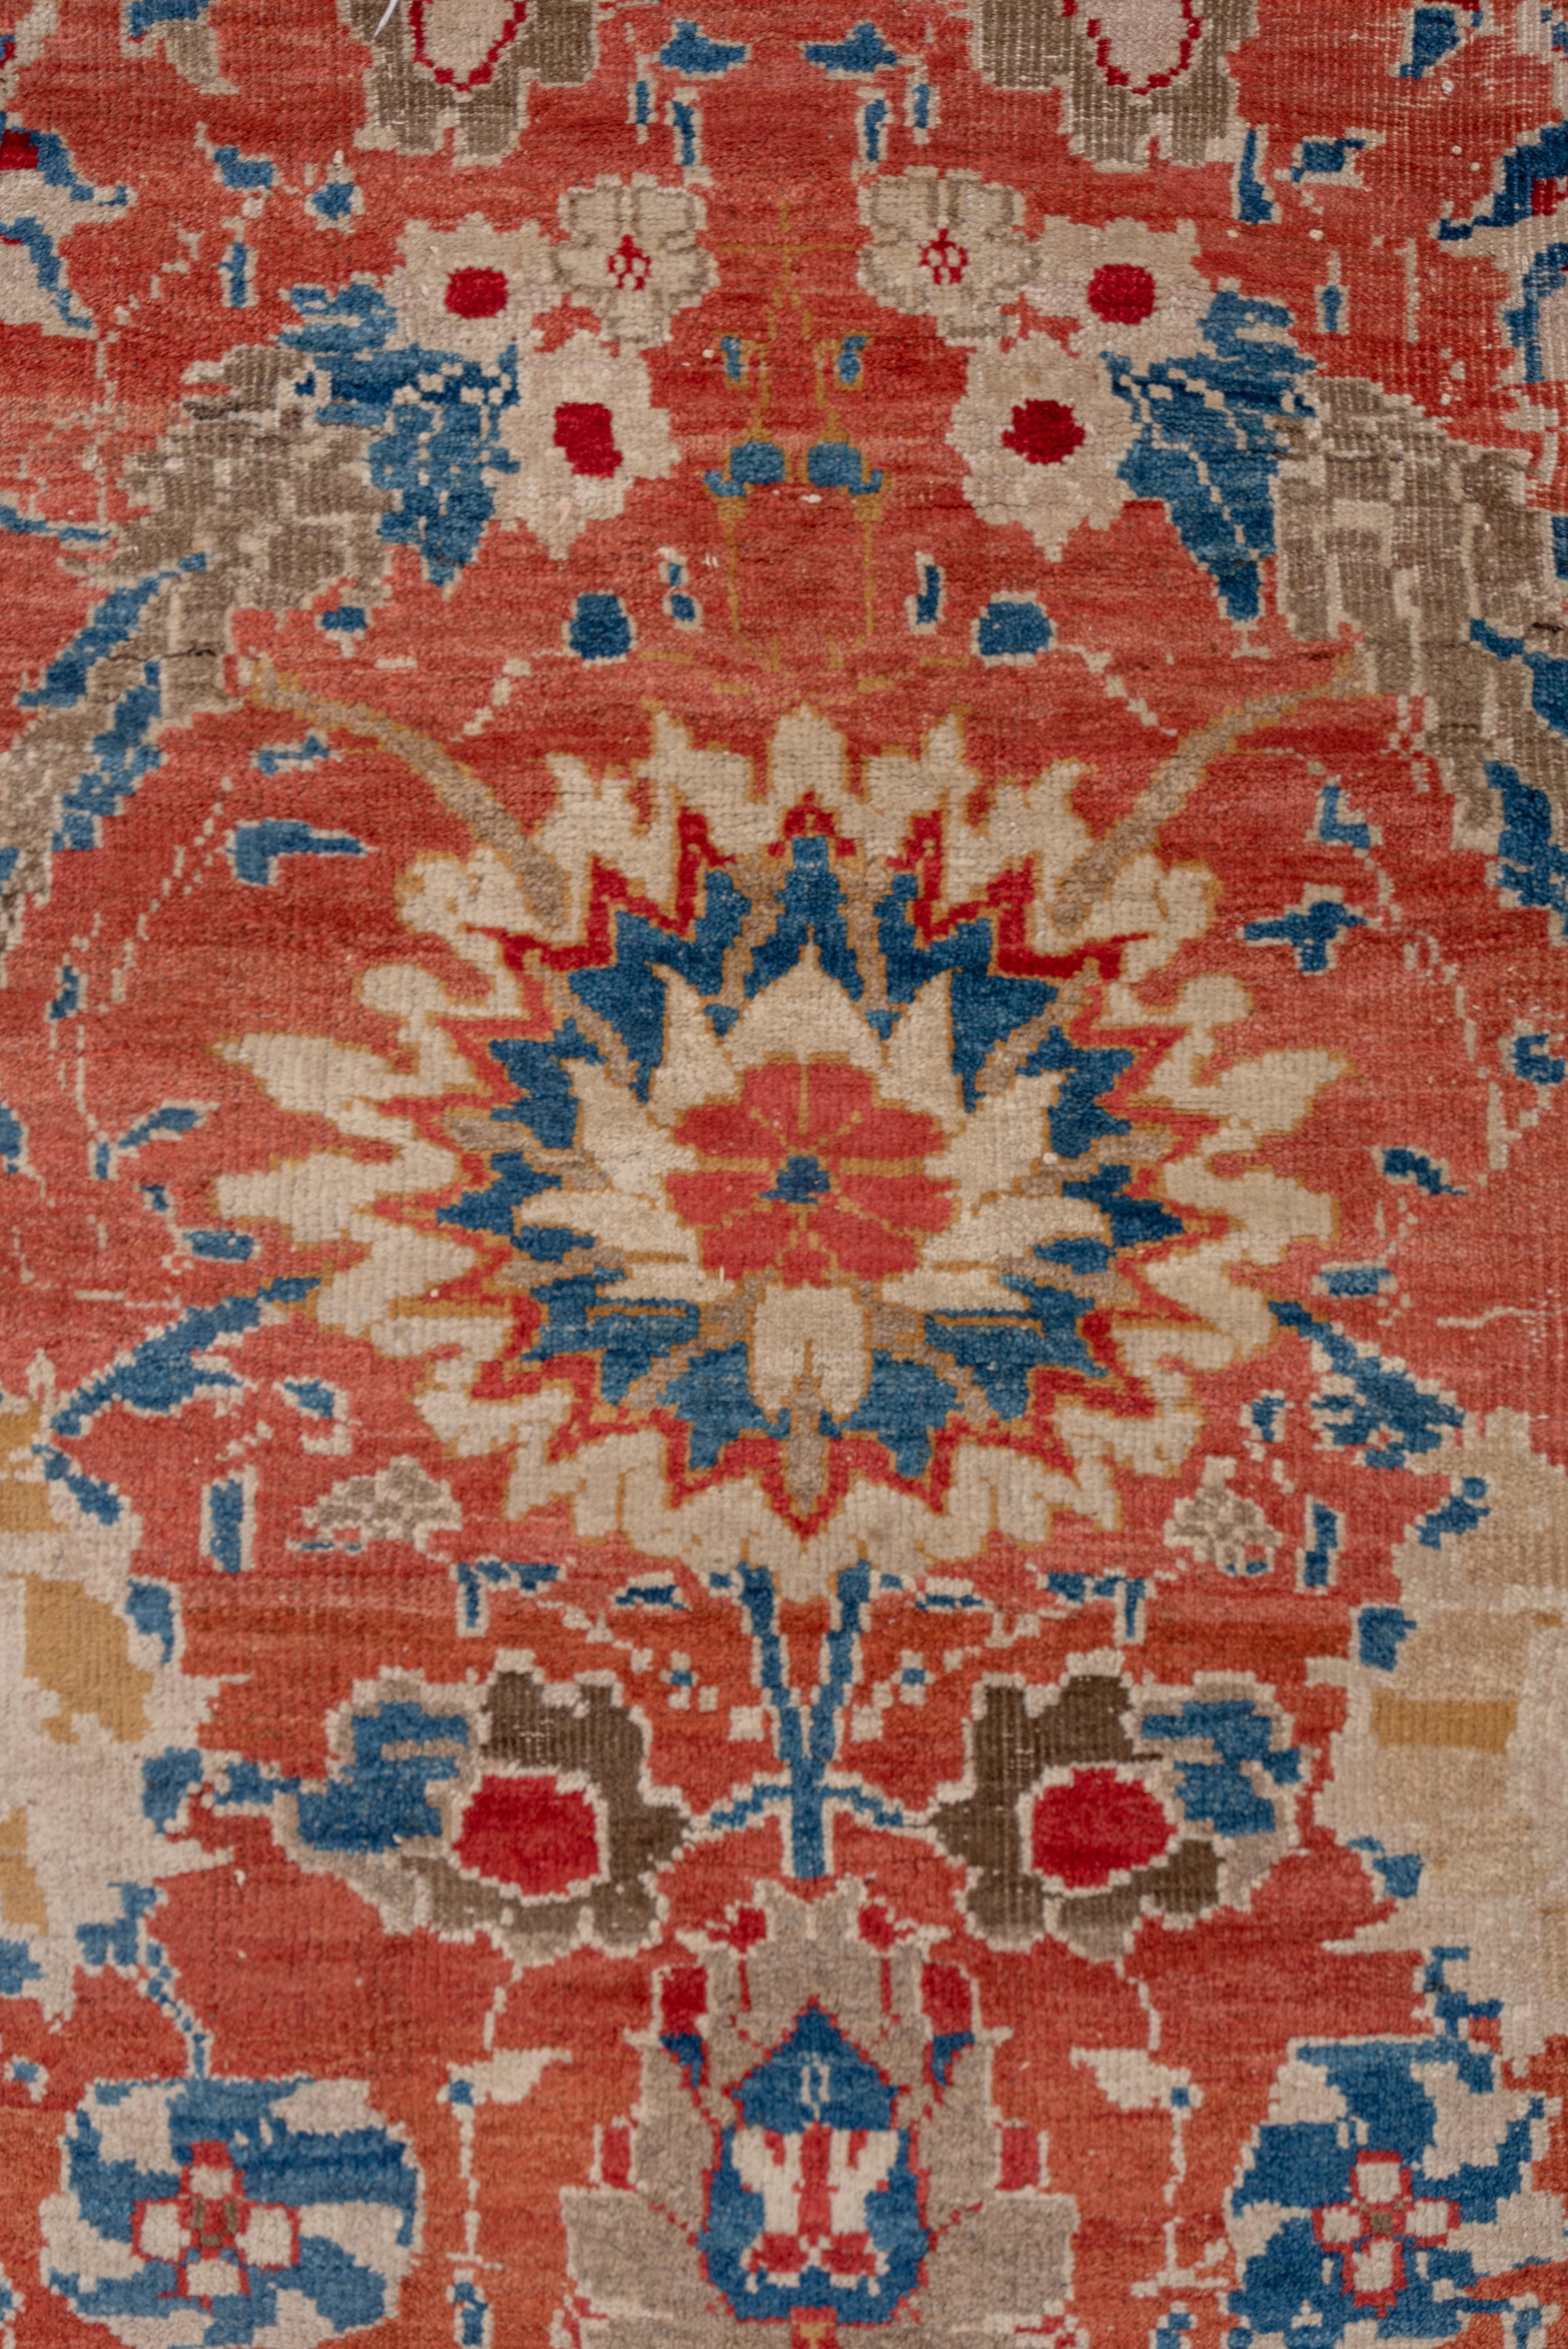 Magnificent Antique Persian Sultanabad Carpet, Bright Orange & Red Allover Field 3